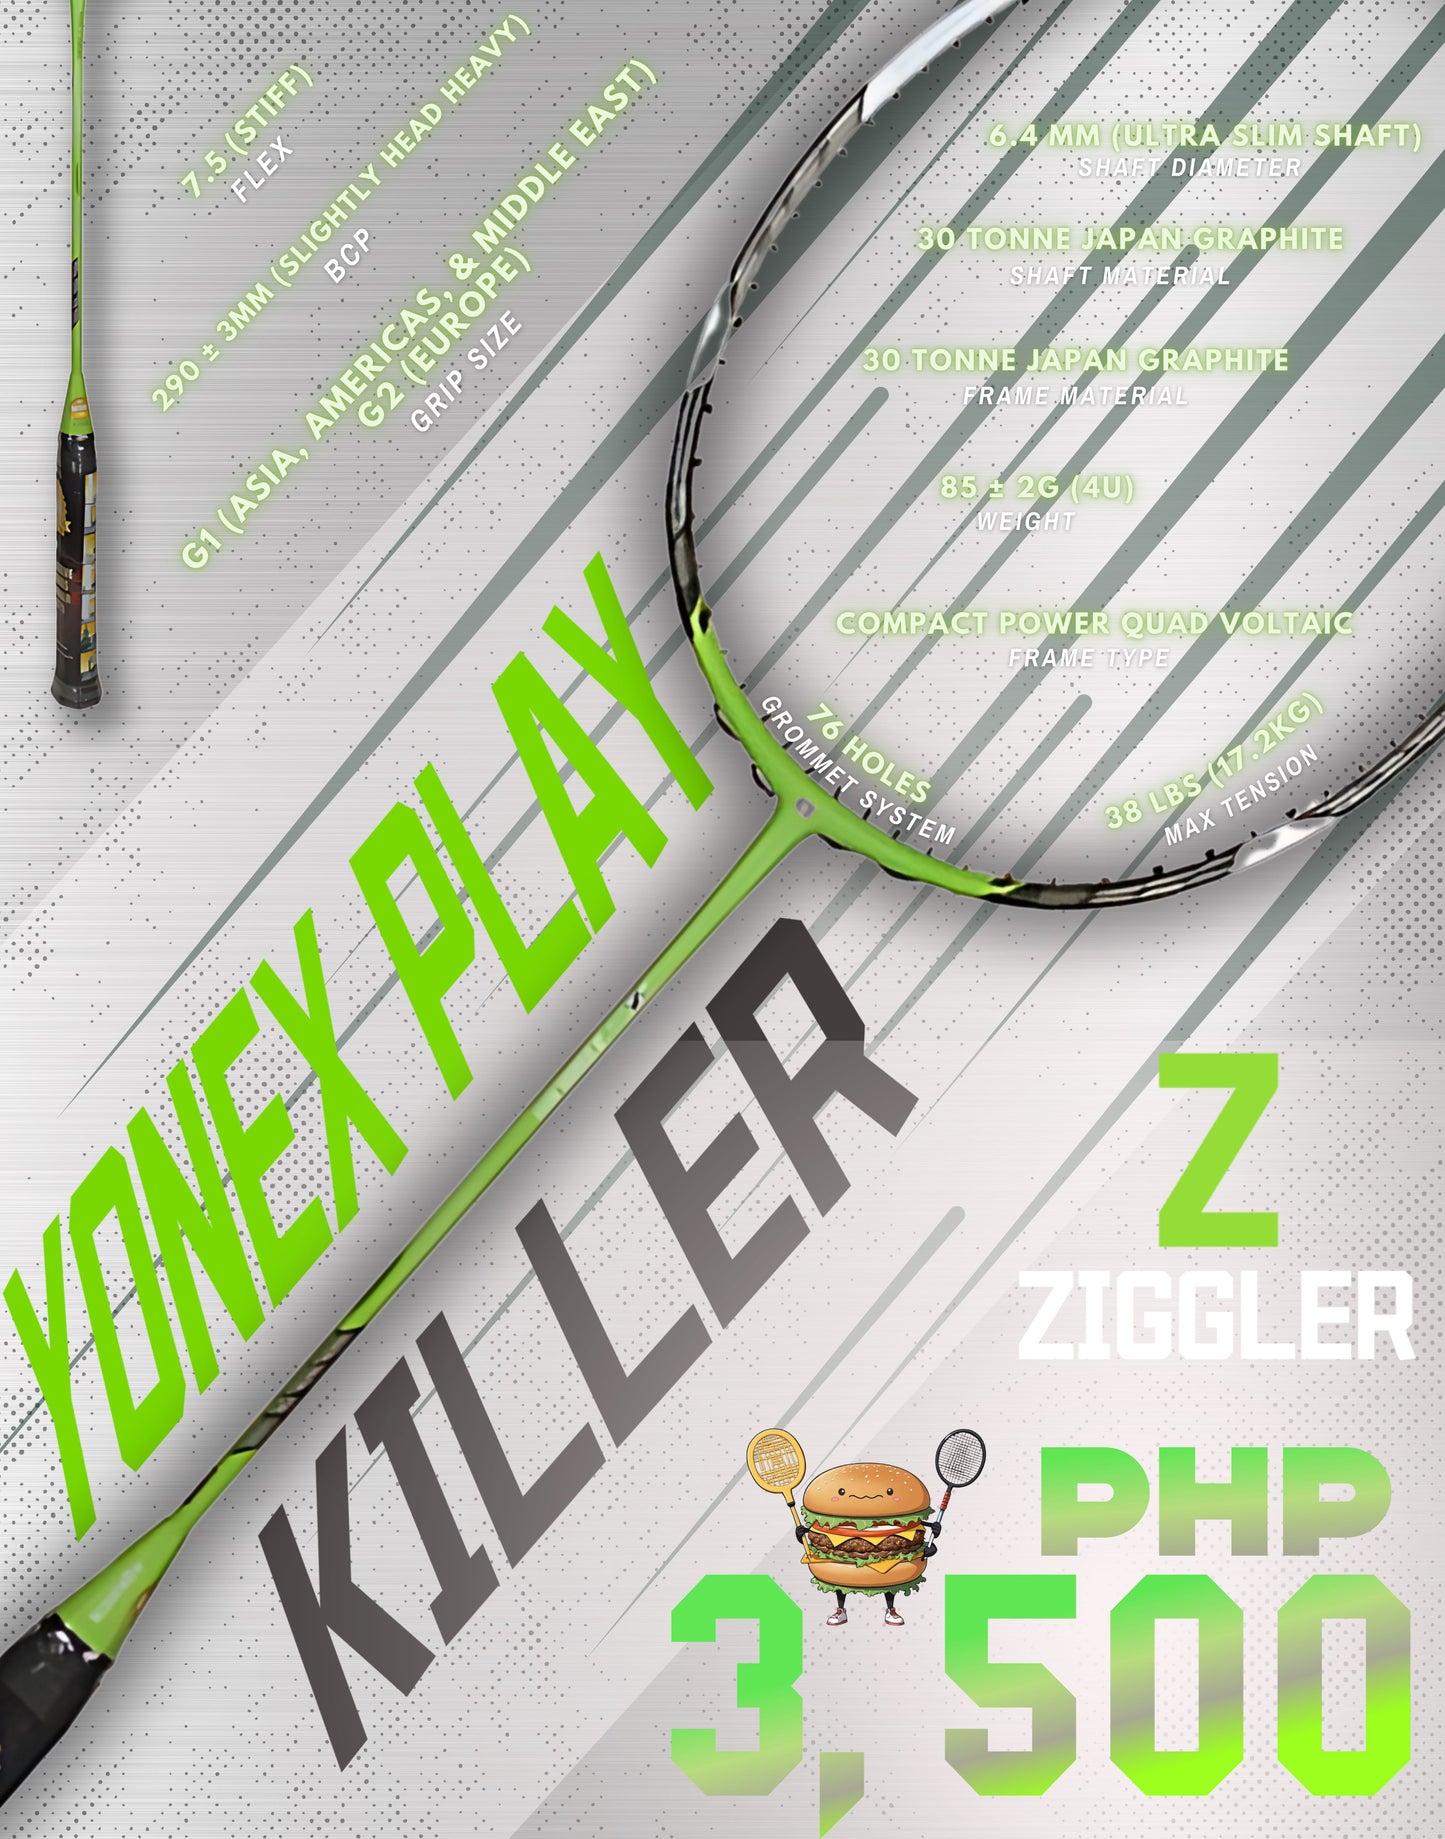 APACS - Z-Ziggler Limited